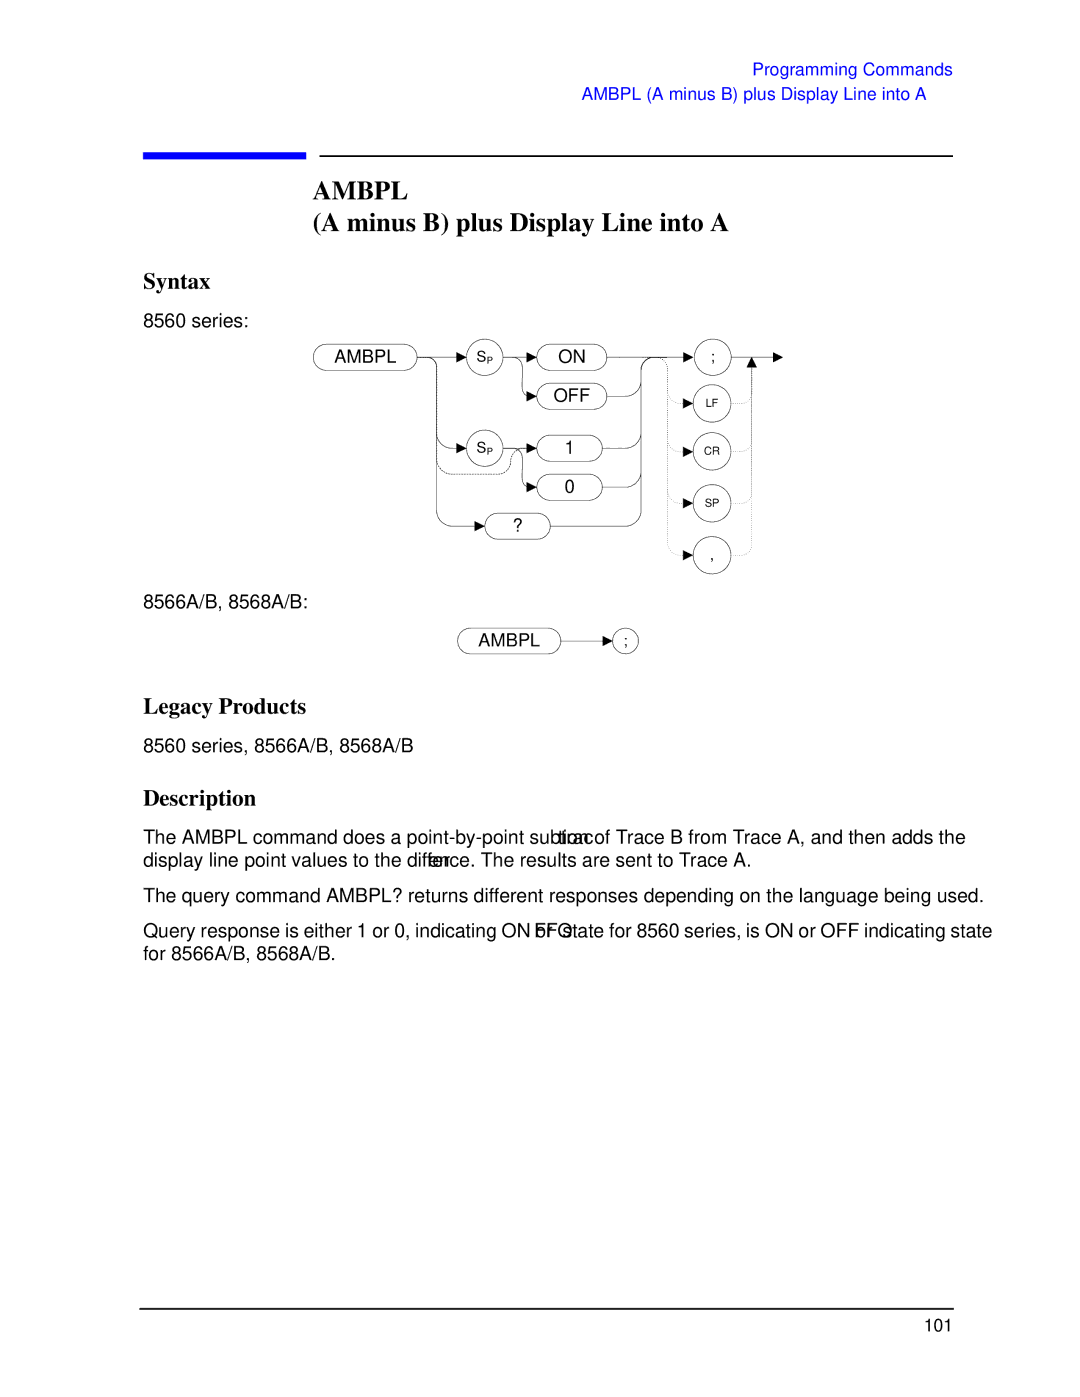 Agilent Technologies N9030a manual Ambpl, Minus B plus Display Line into a 